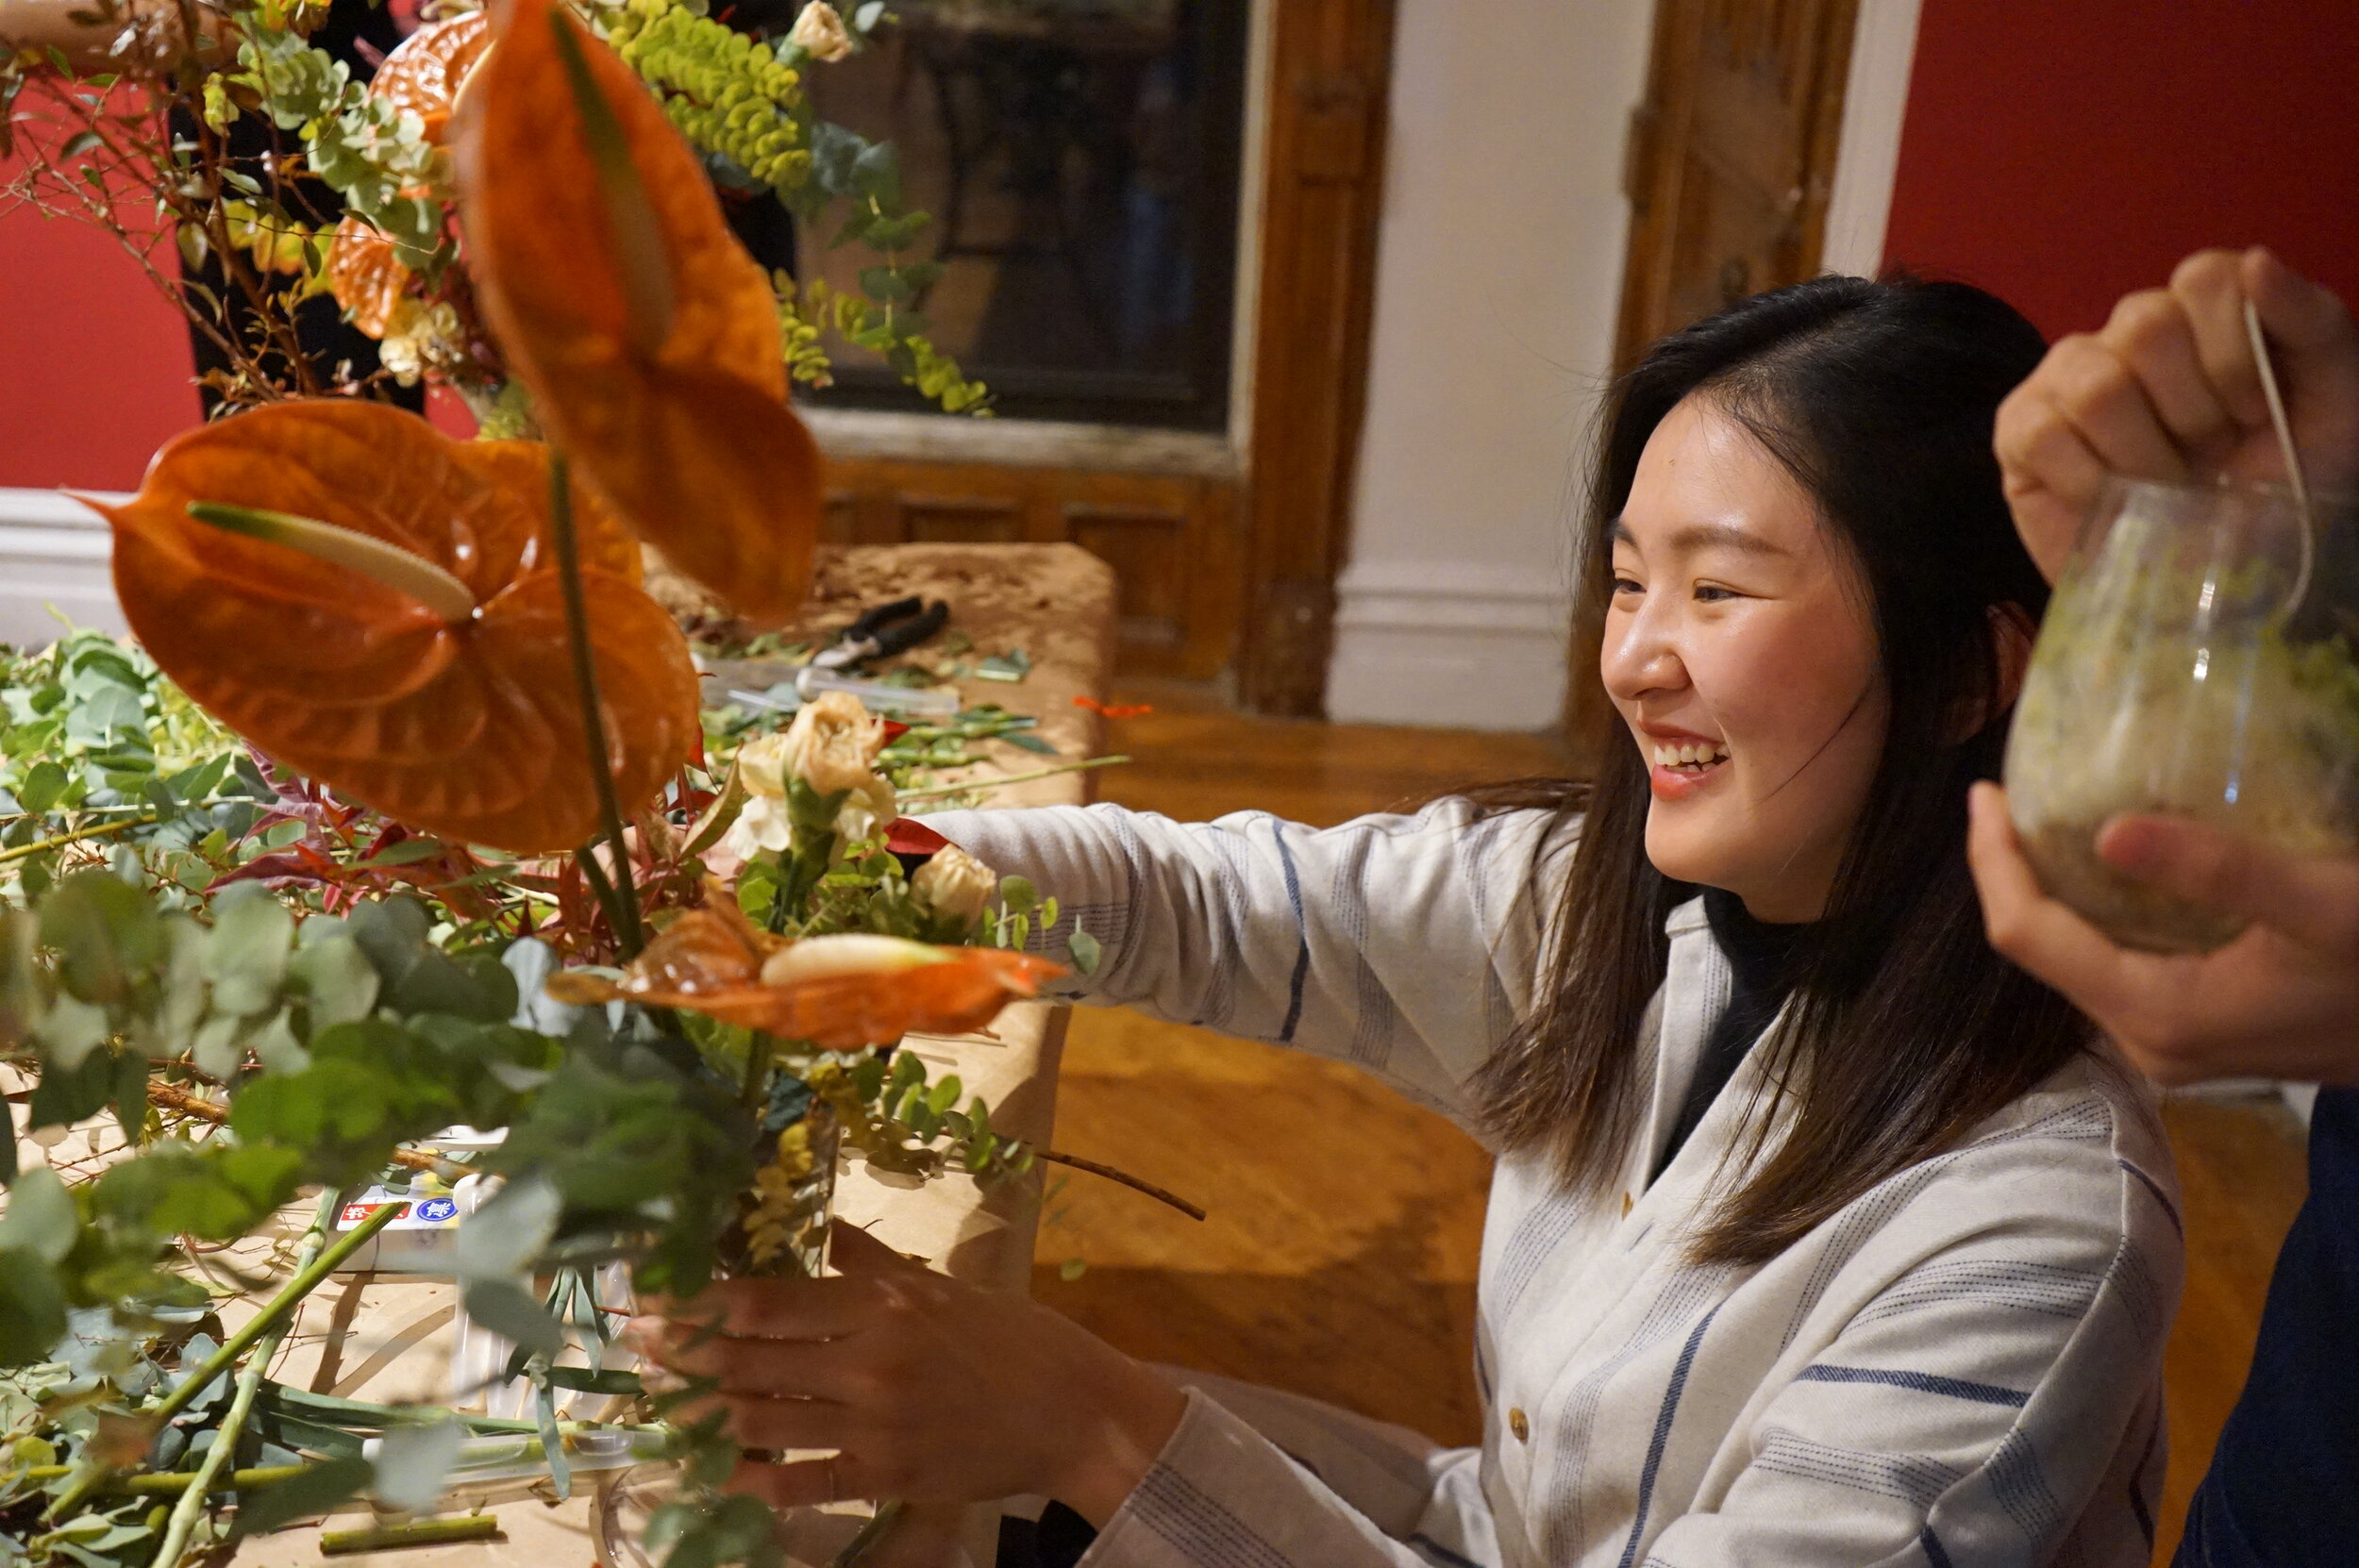   A Taste of Ikebana  at Fou Gallery (11.9.2019), photo by Yilan Wang, courtesy Fou Gallery. 